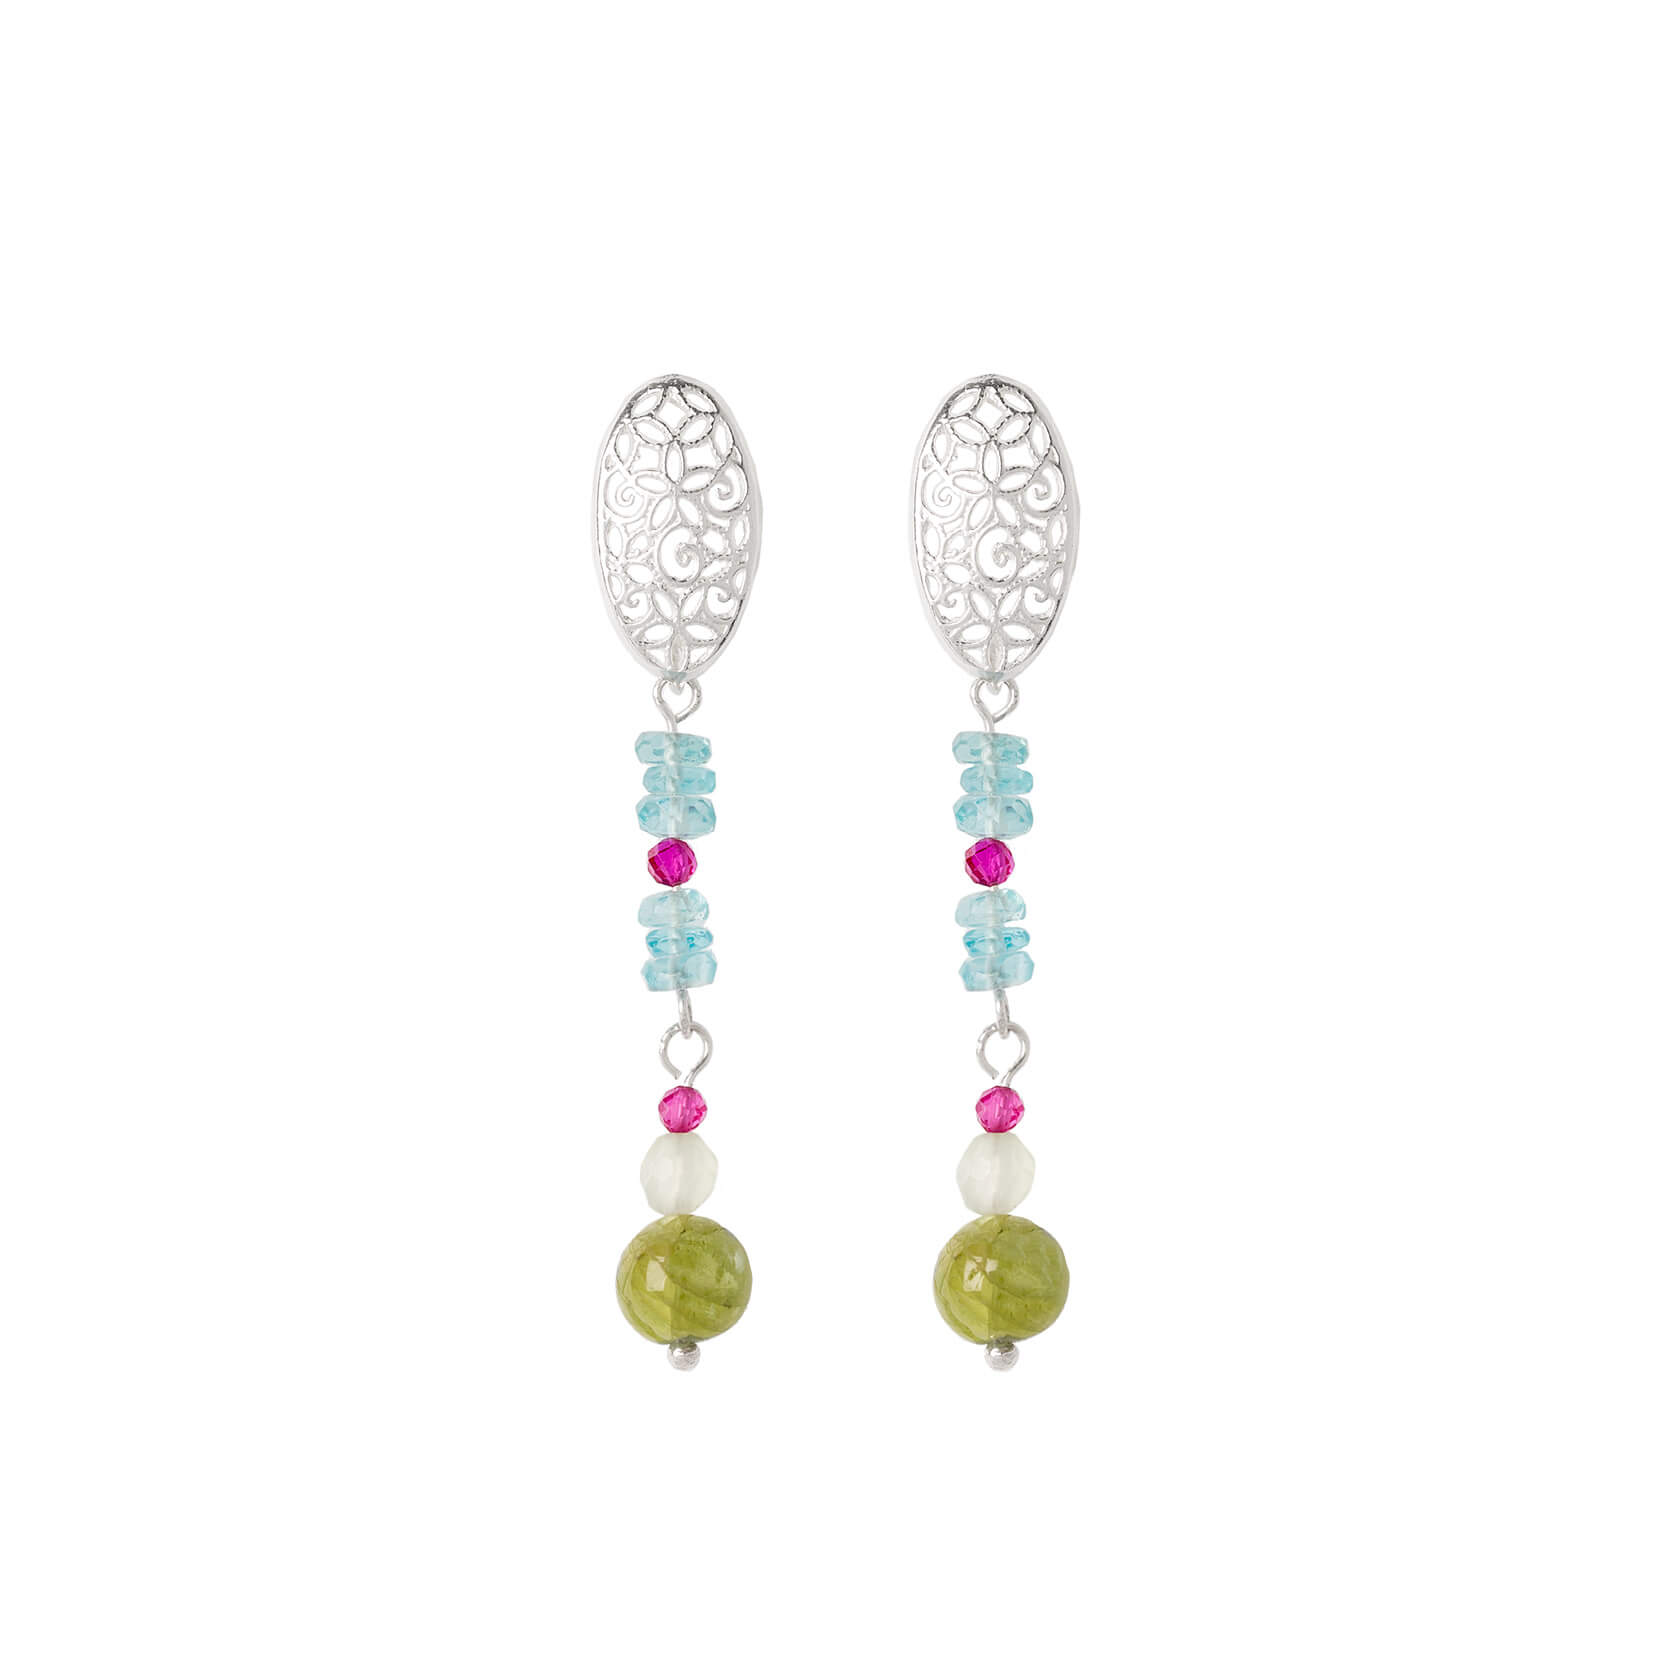 Apatite earrings with oval mandala